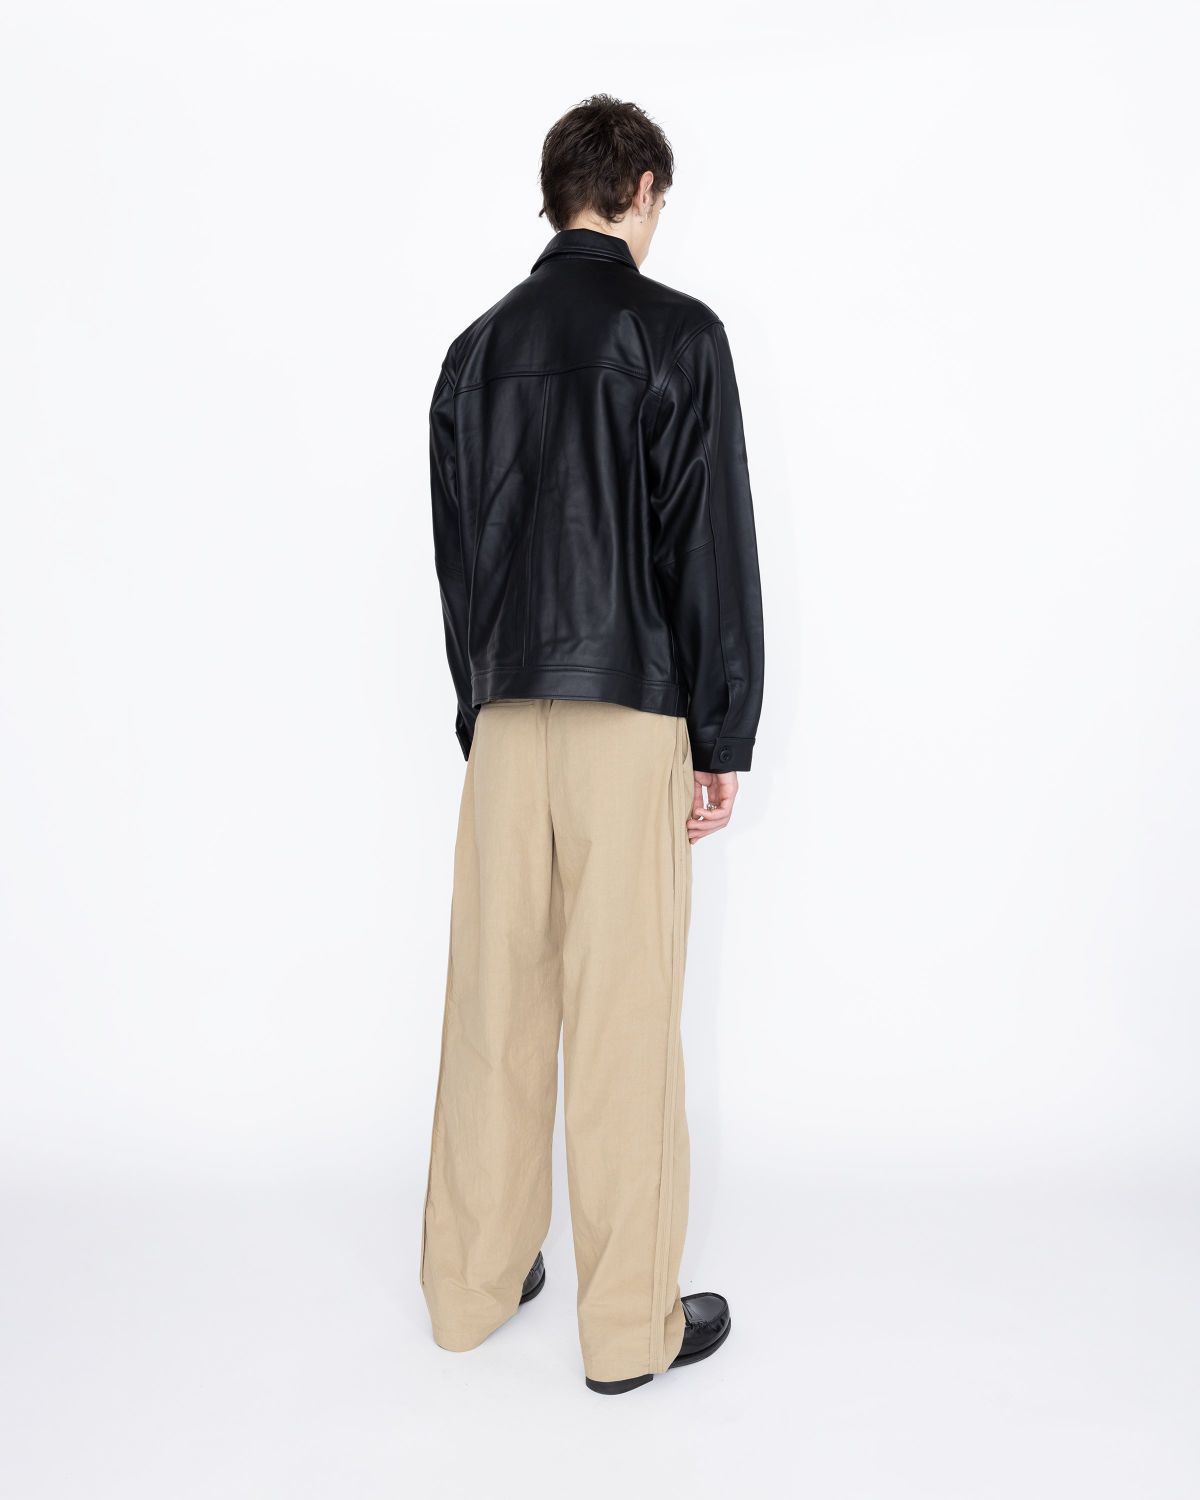 Highsnobiety HS05 – Leather Jacket Black - Outerwear - Black - Image 5